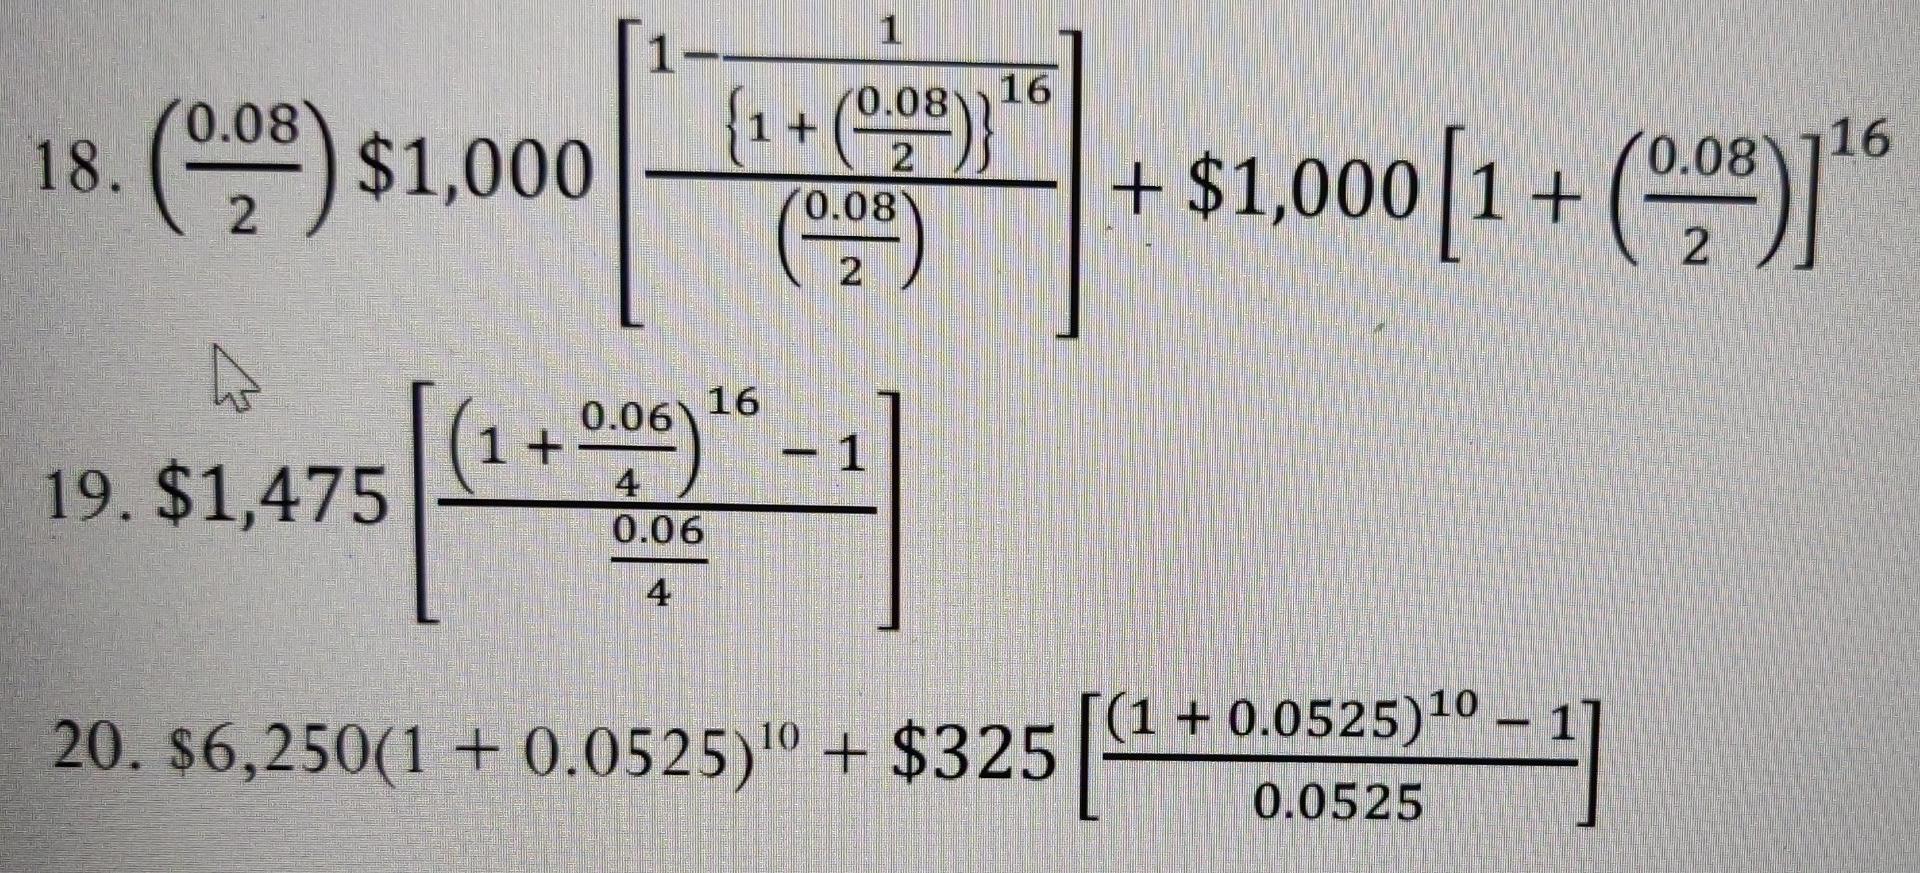 Solved 1 0.08 16 0.08 {1+00:00) 18. 16 (198) $1,000 0.08 2 | Chegg.com